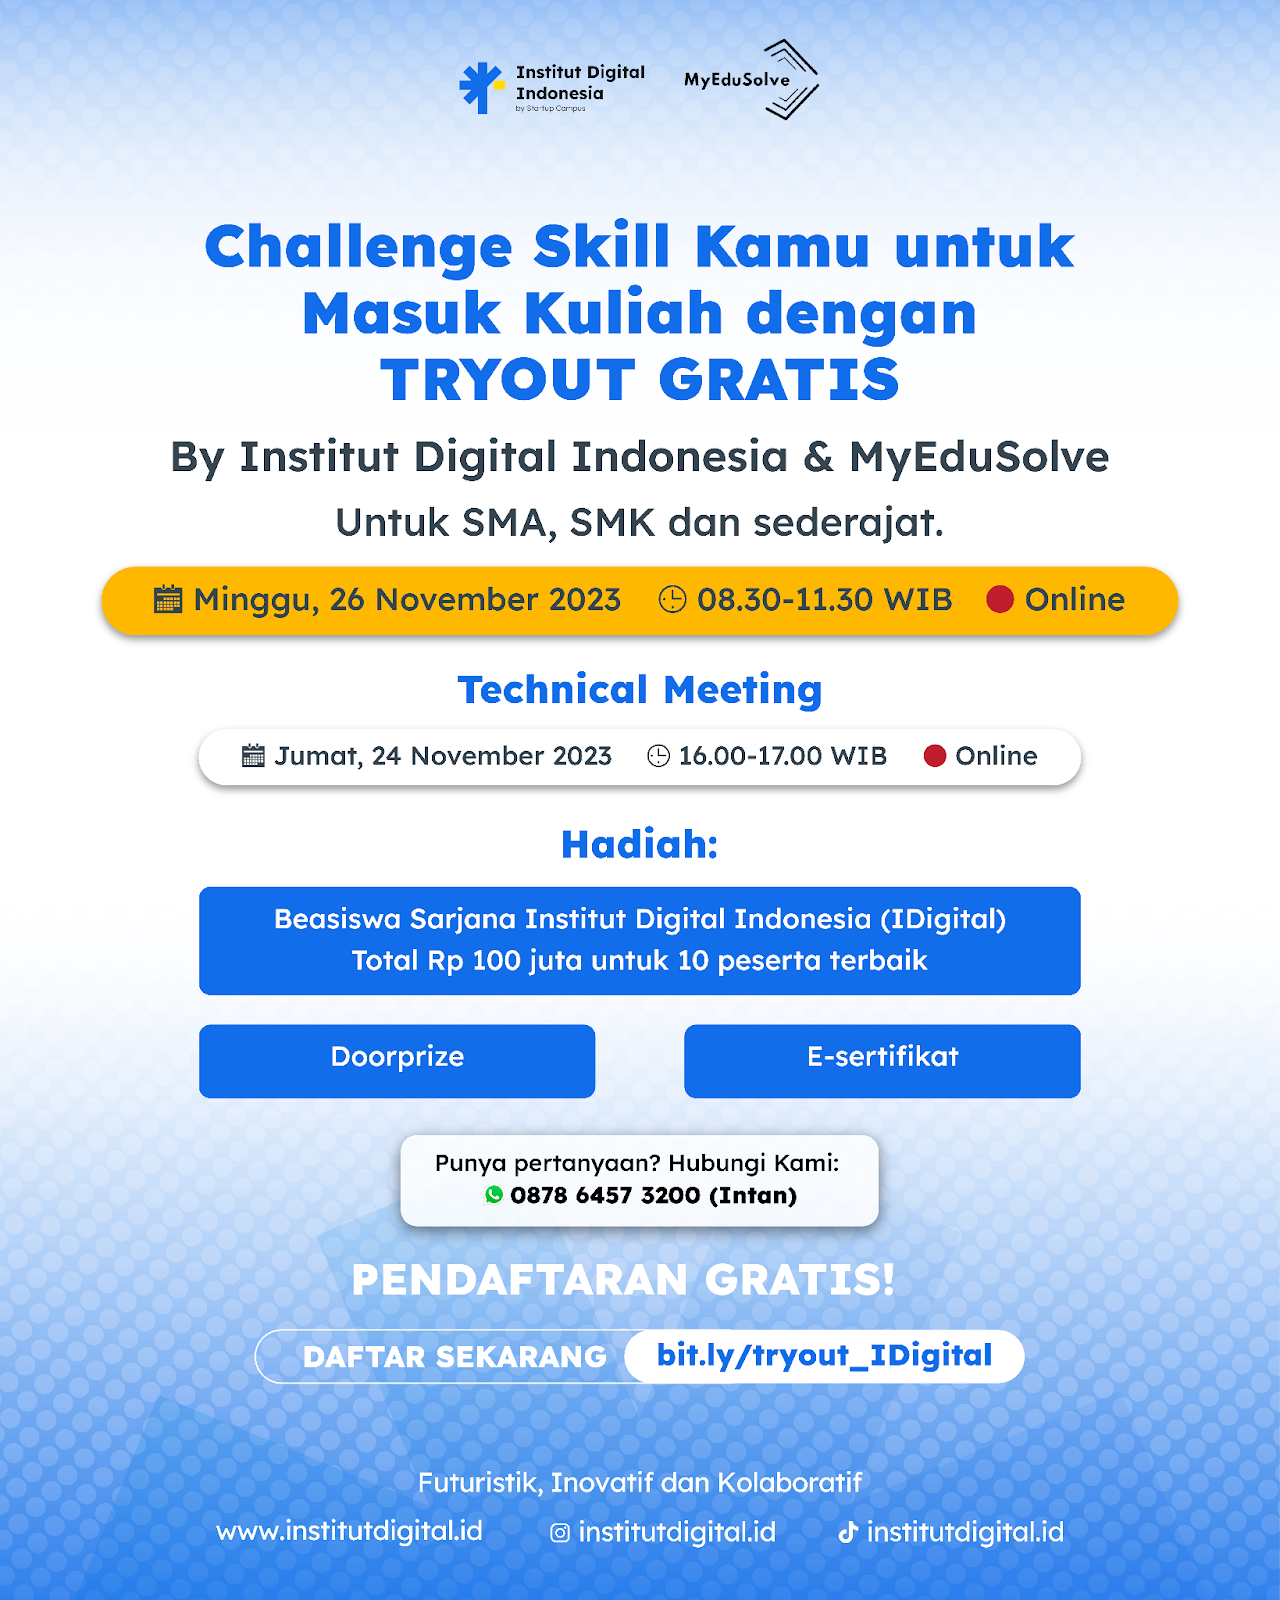 Tryout online gratis di Institut Digital Indonesia